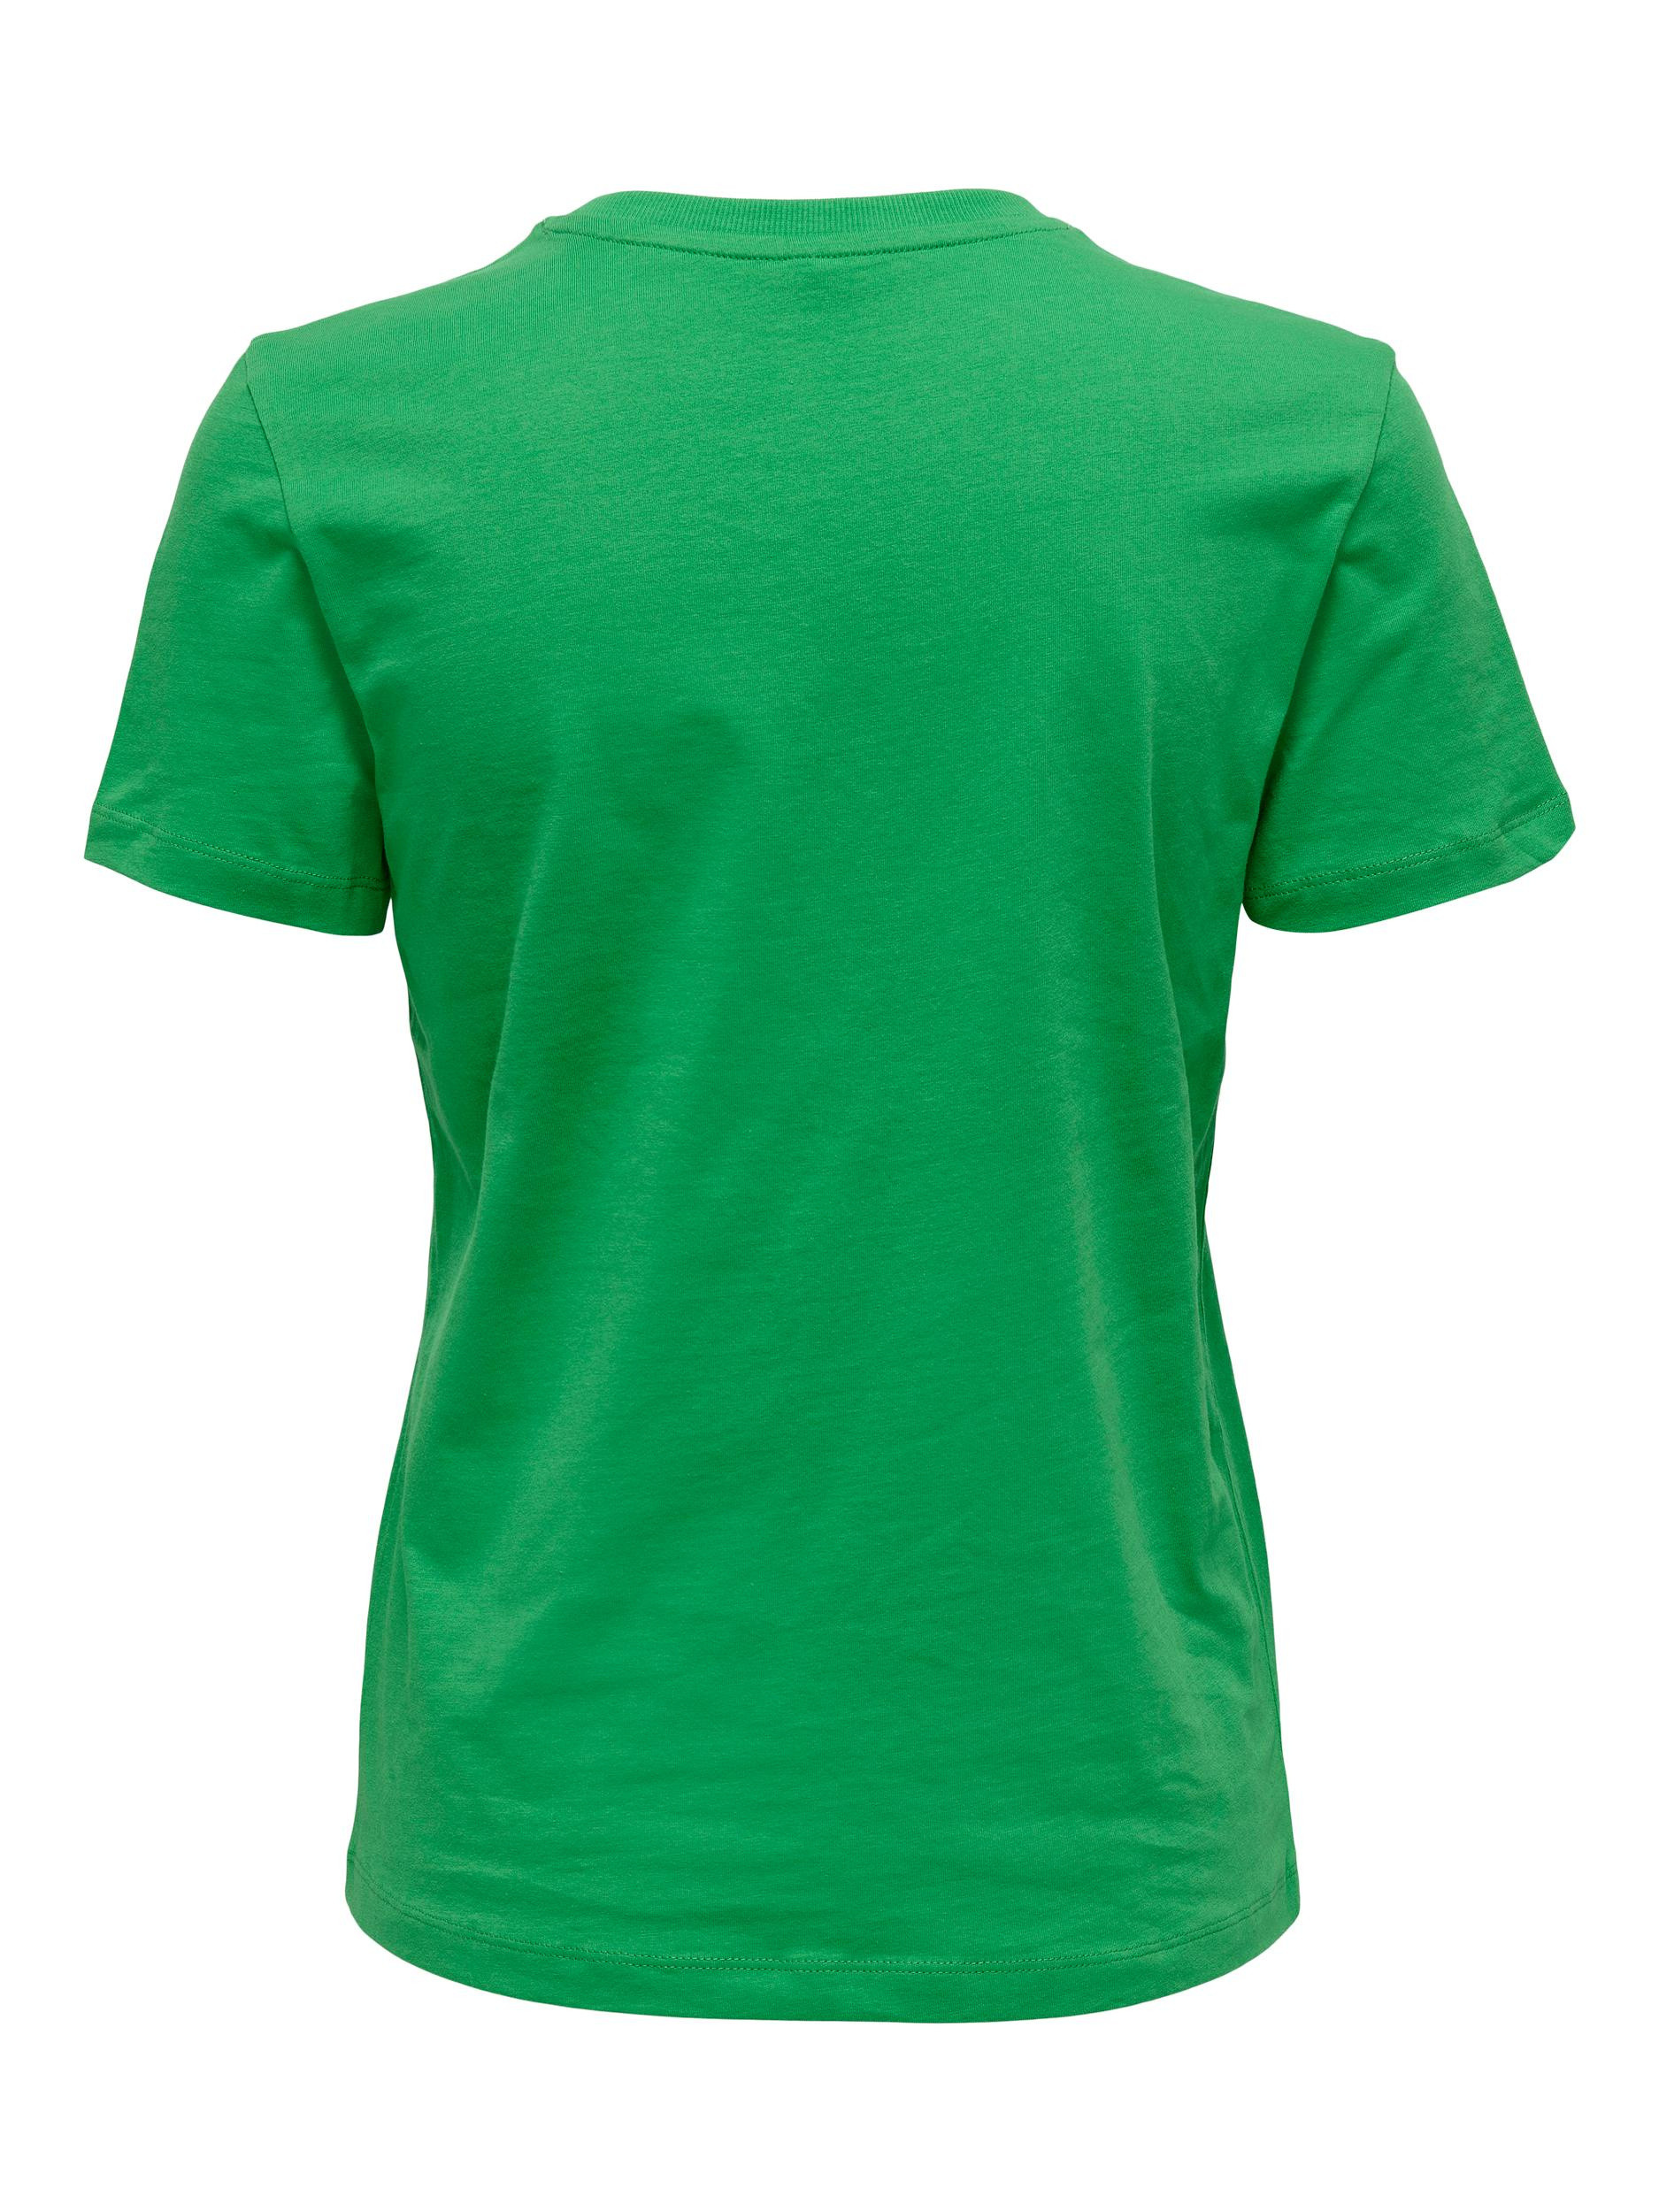 Only - T-shirt regular fit con stampa, Verde, large image number 1